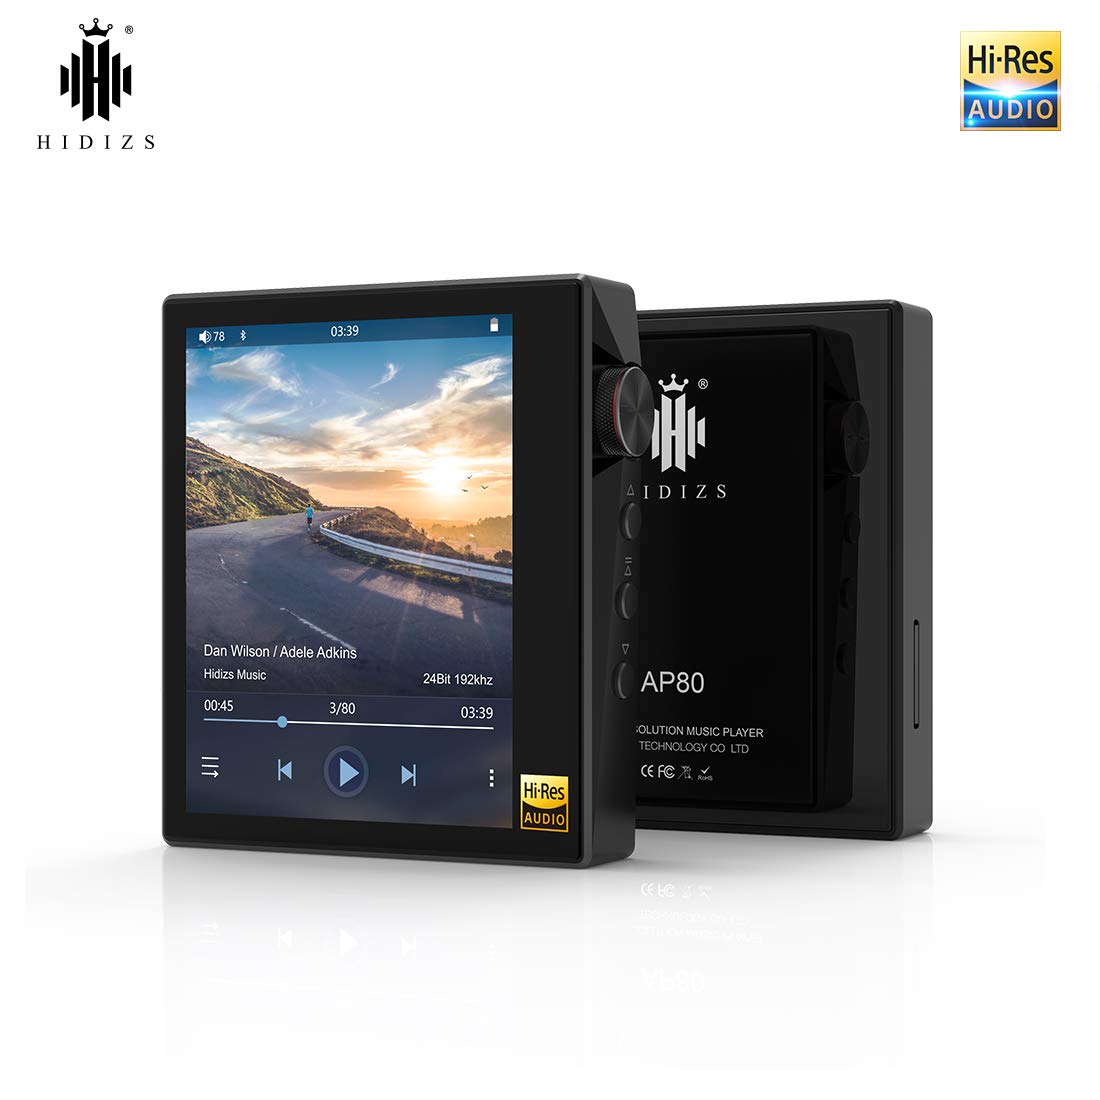 HIDIZS AP80 Digital Audio Player